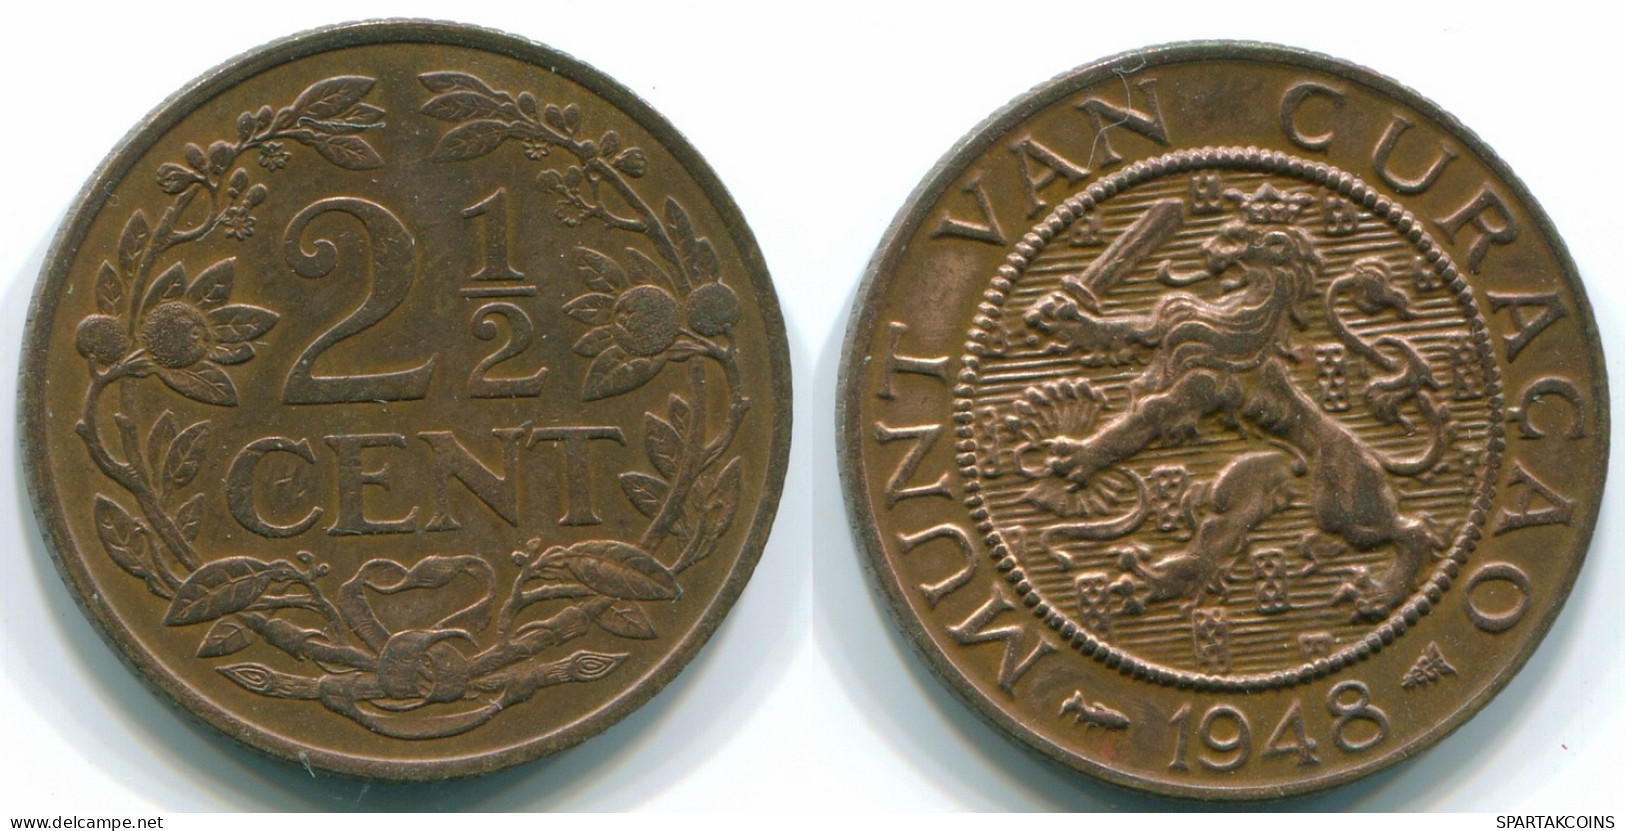 2 1/2 CENT 1948 CURACAO NÉERLANDAIS NETHERLANDS Bronze Colonial Pièce #S10117.F.A - Curaçao